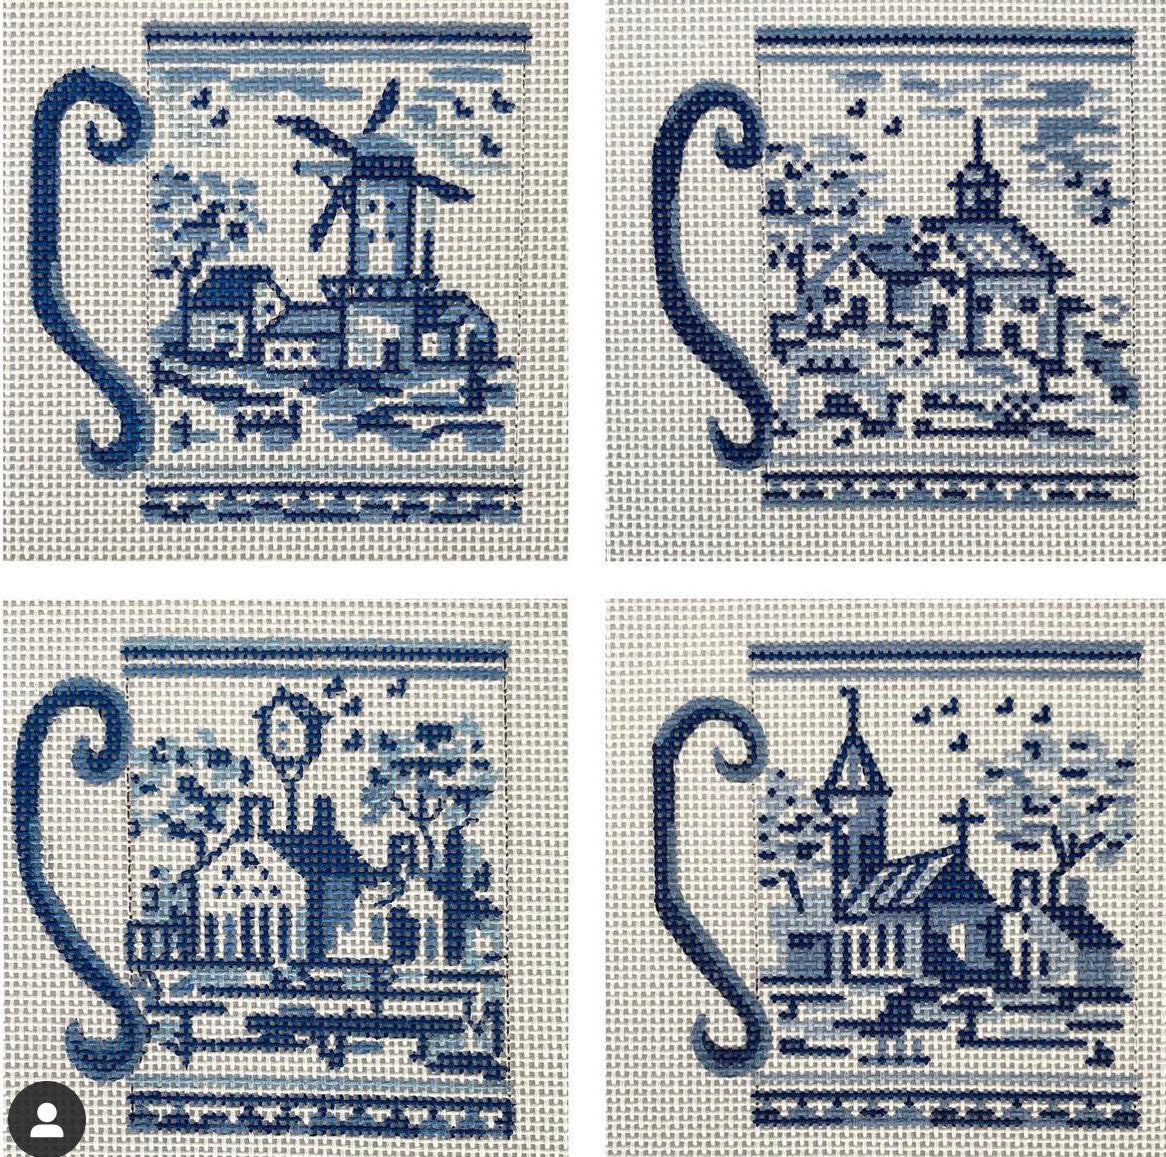 Plum Stitchery Delft Landscape Coasters - 4 Coasters